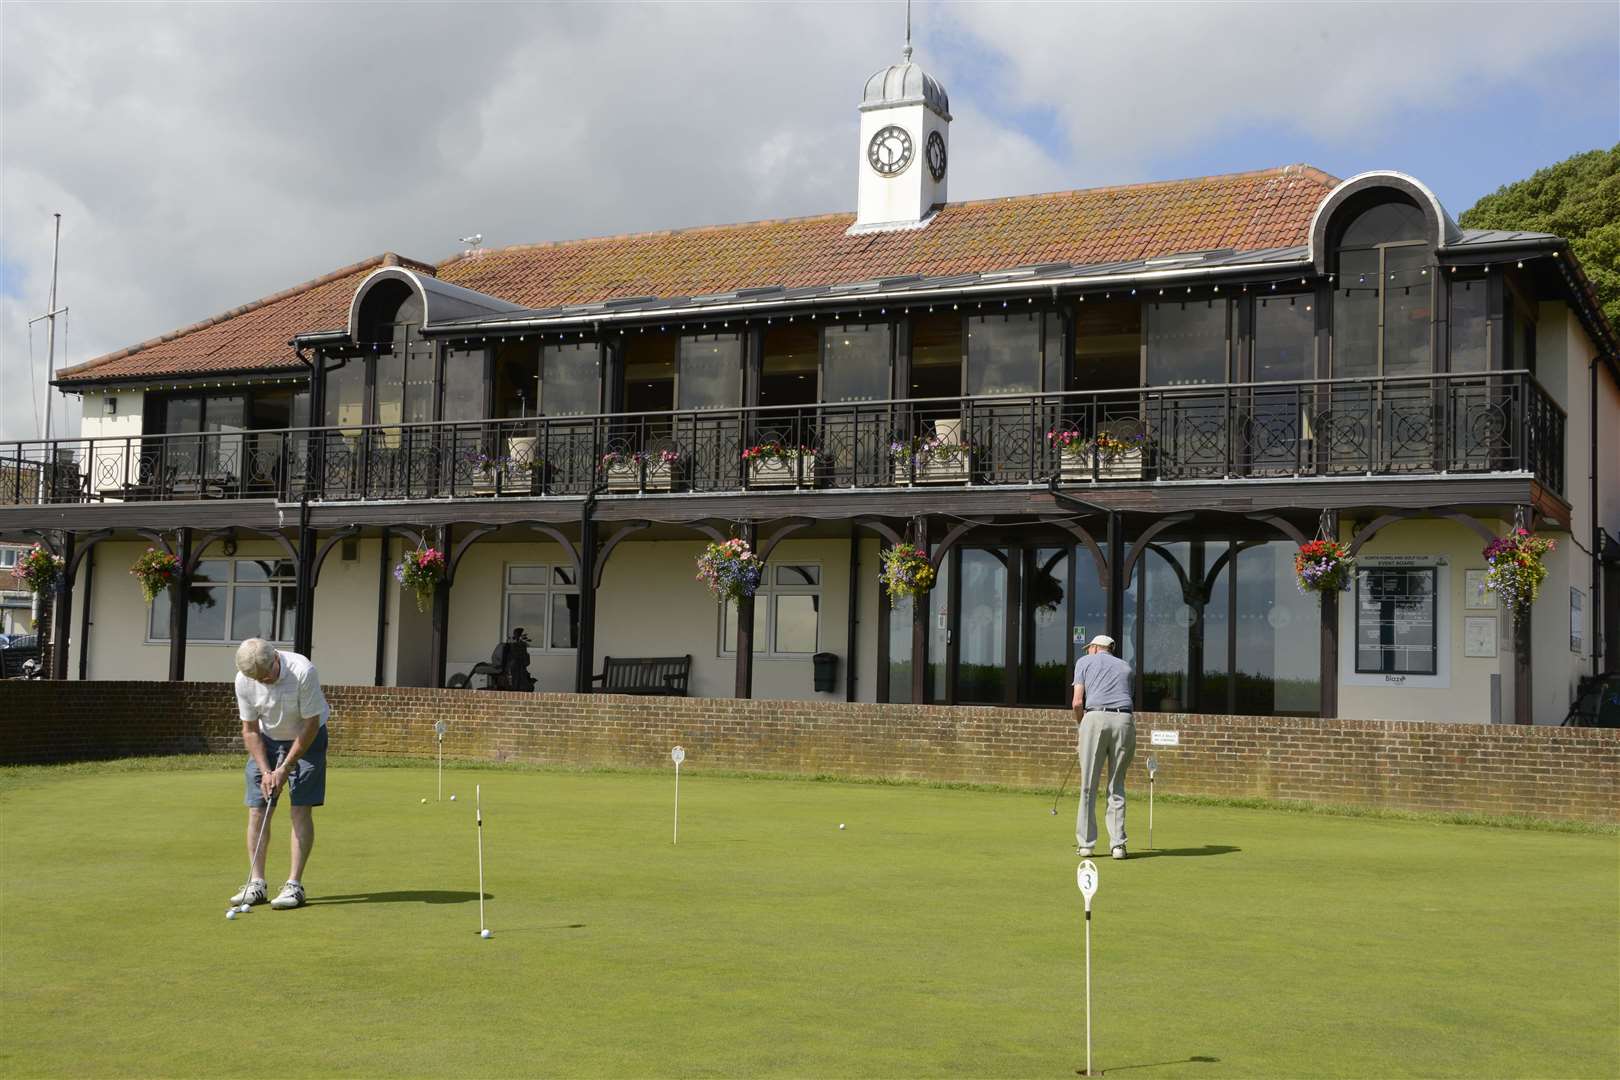 North Foreland Golf Club in Broadstairs